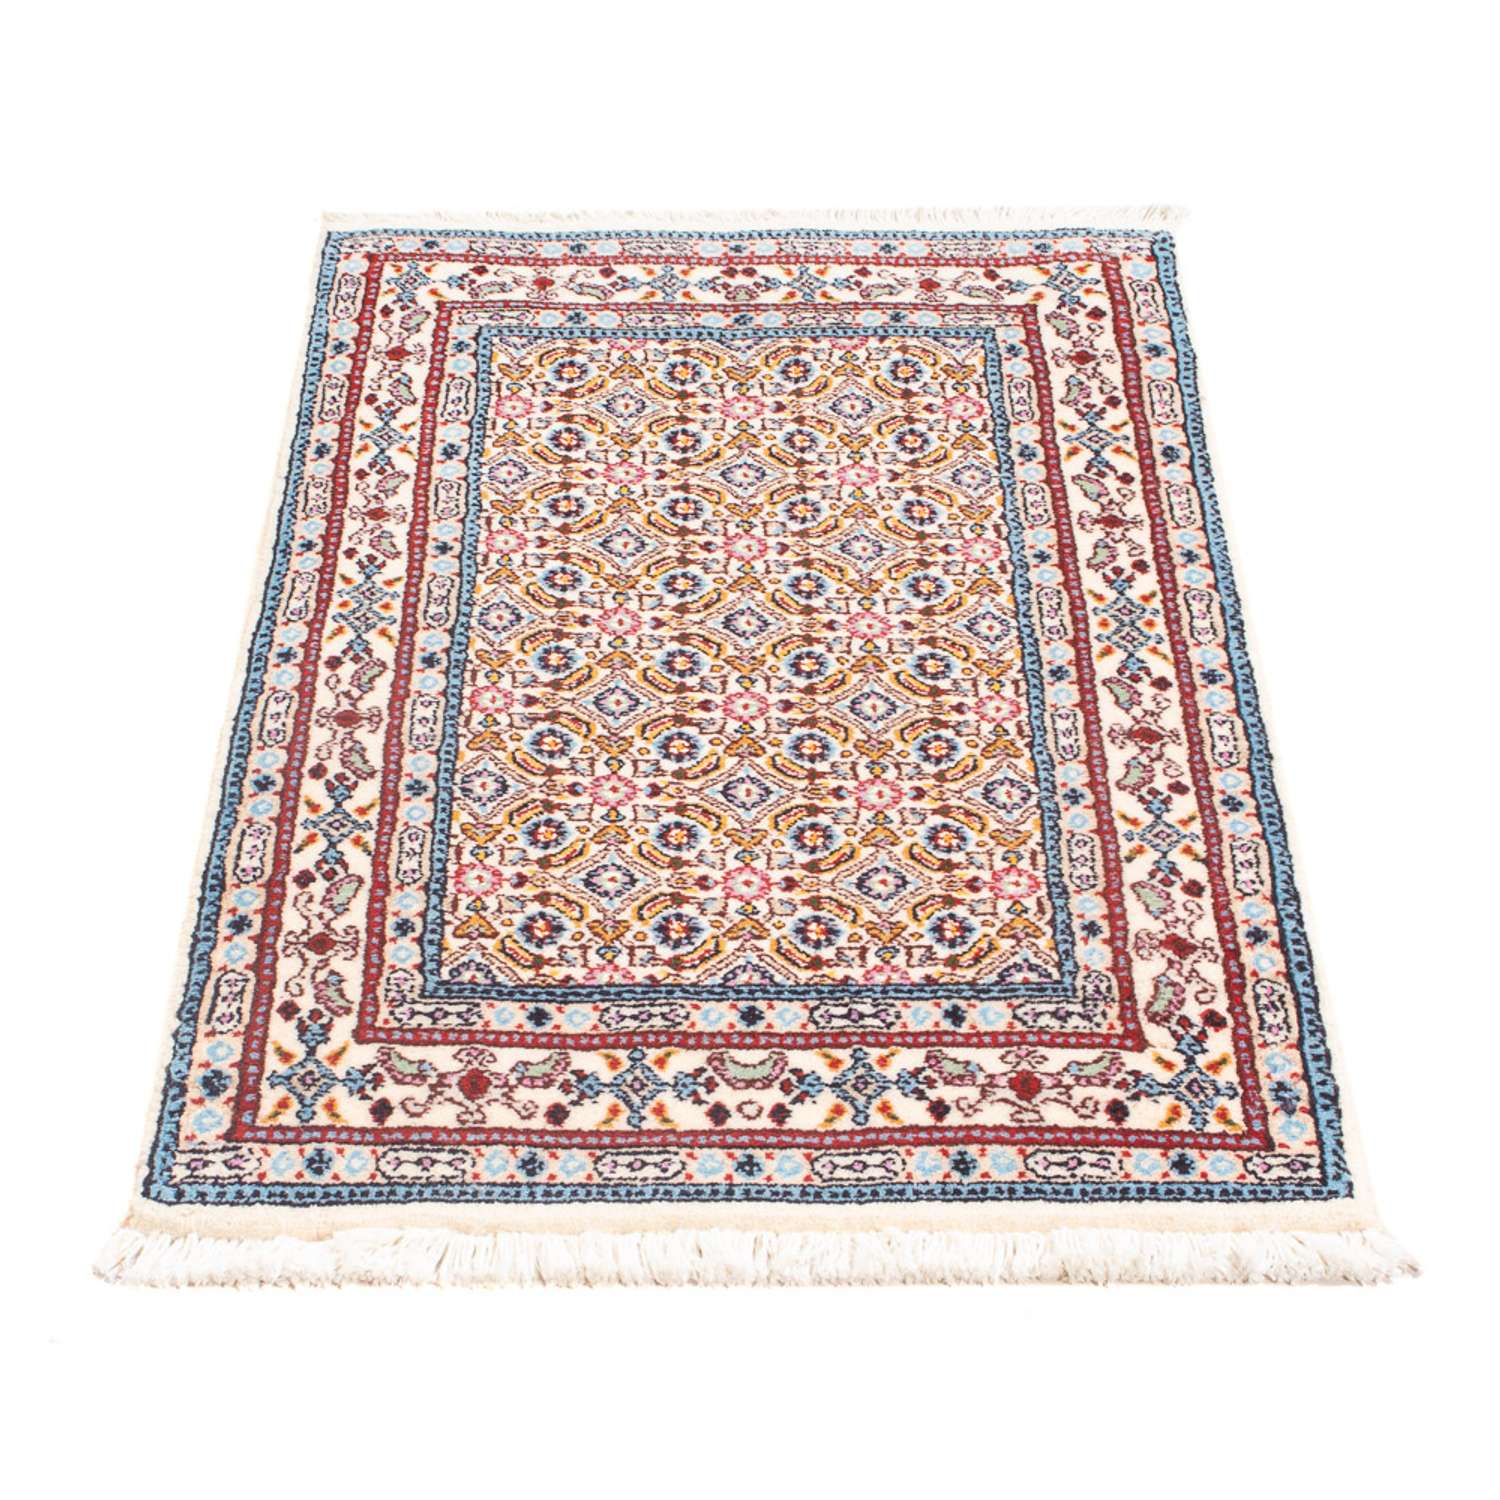 Tapis persan - Classique - Royal - 90 x 60 cm - multicolore